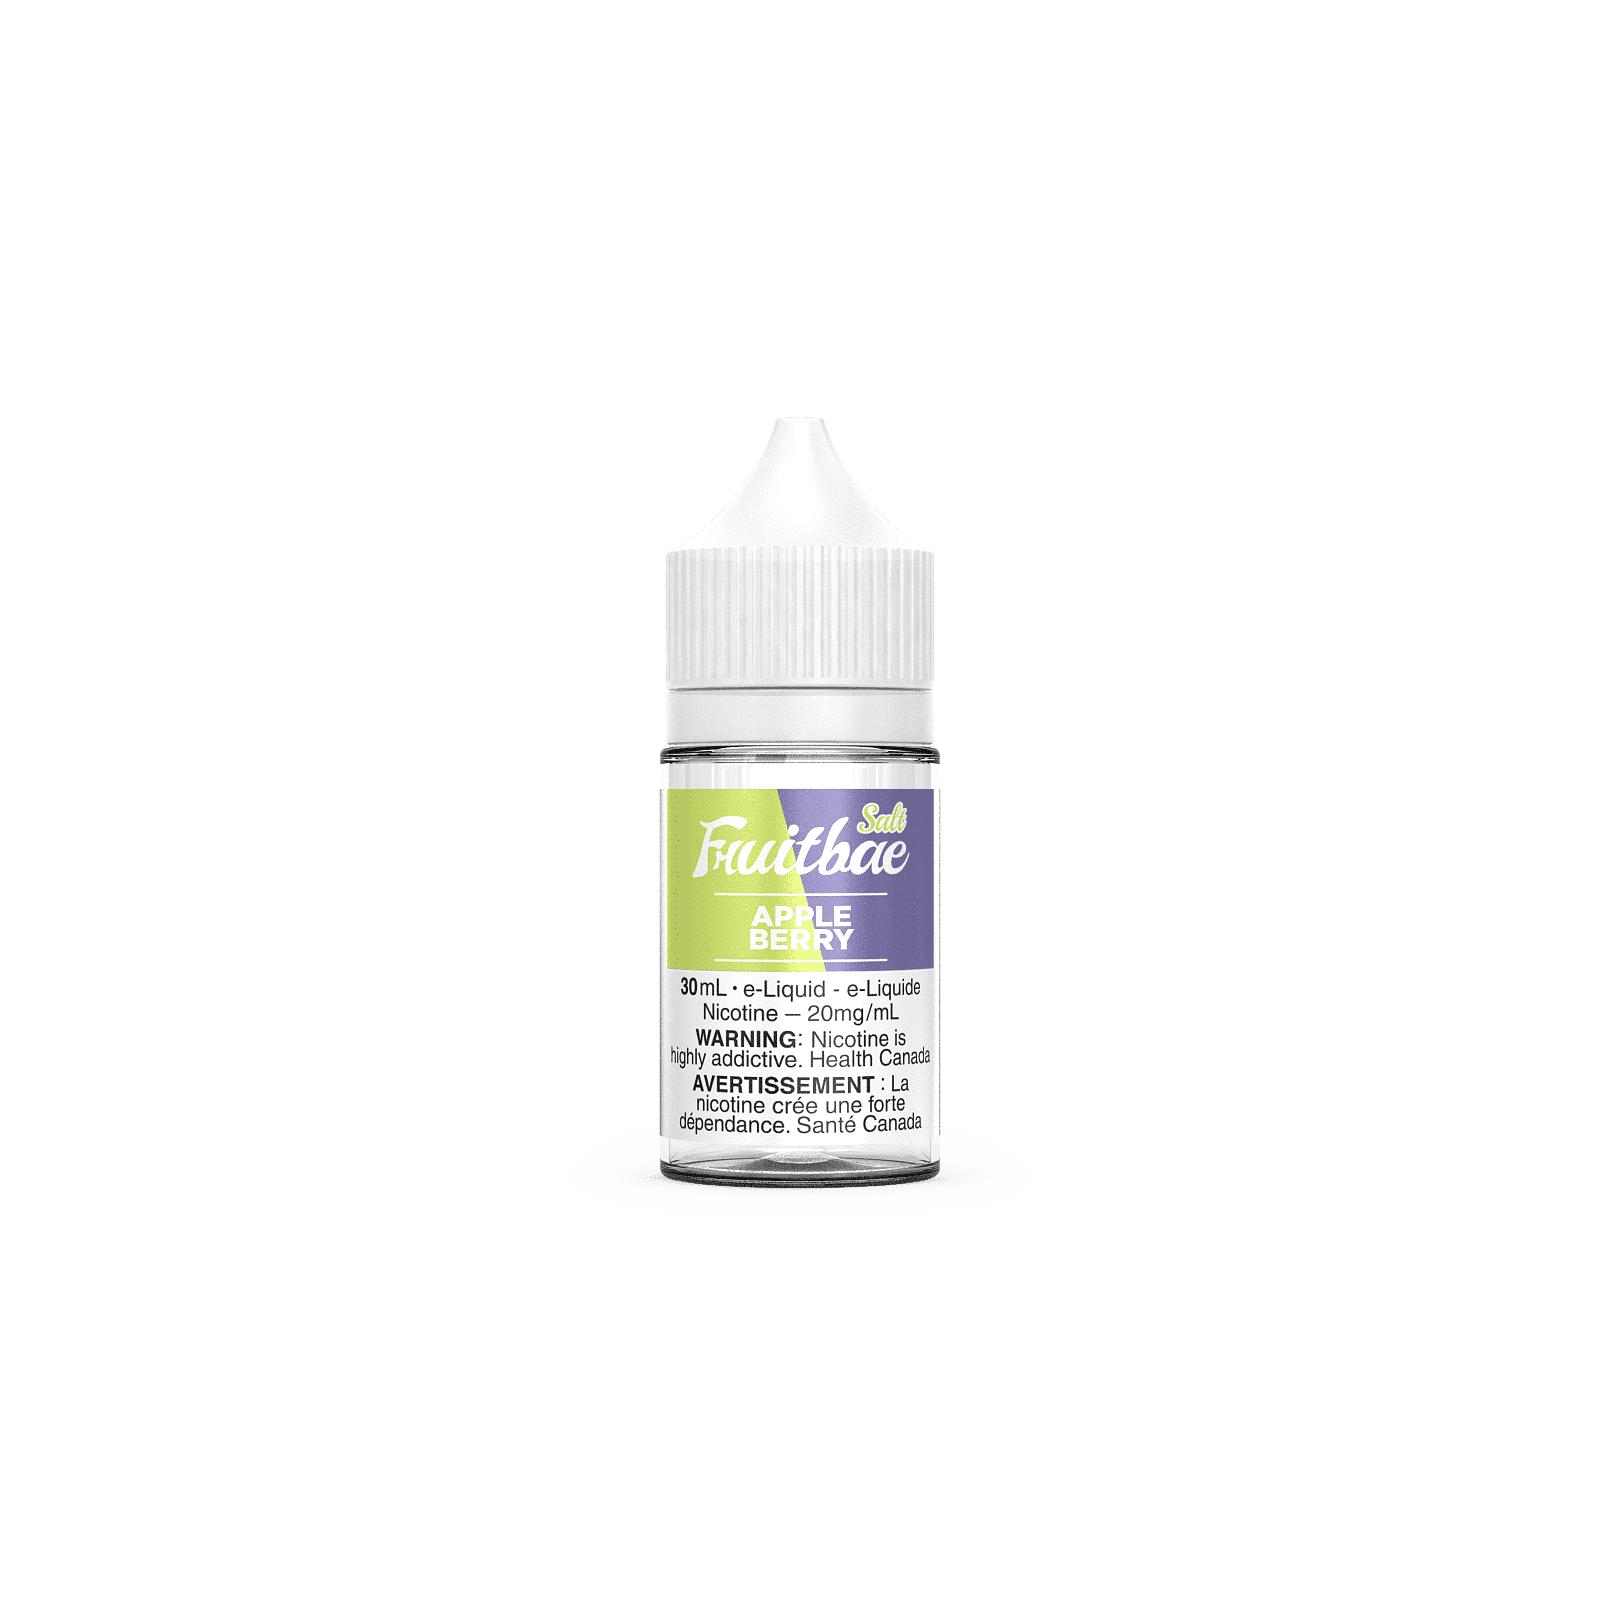 APPLE BERRY BY FRUITBAE SALT (30mL) - Smoke FX